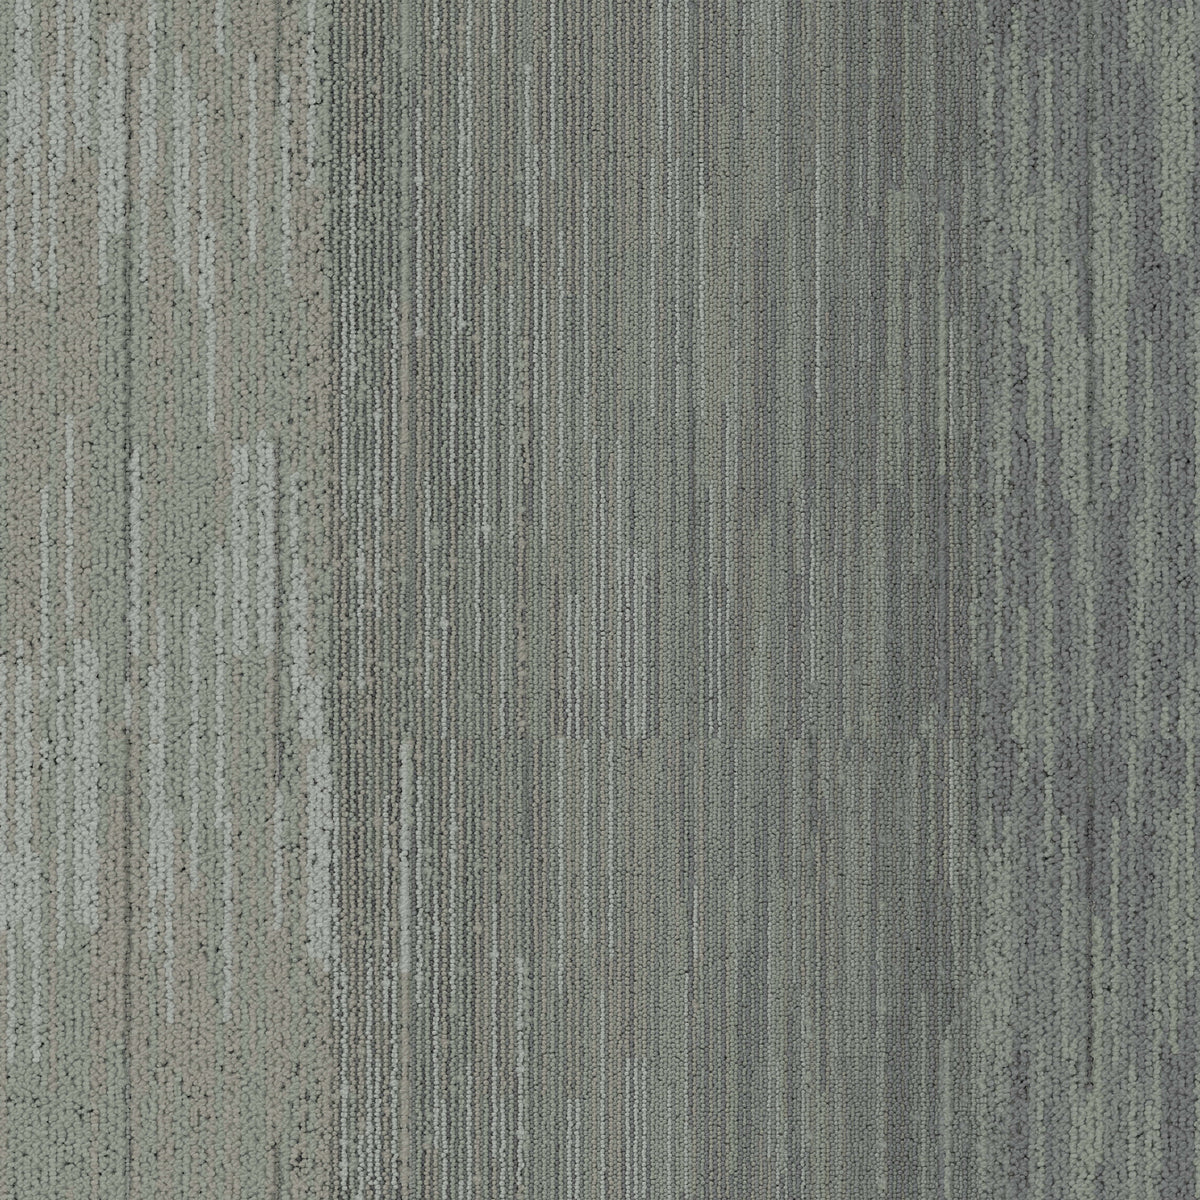 Mohawk Group - State of Mind II - Amused II - Carpet Tile - Interested